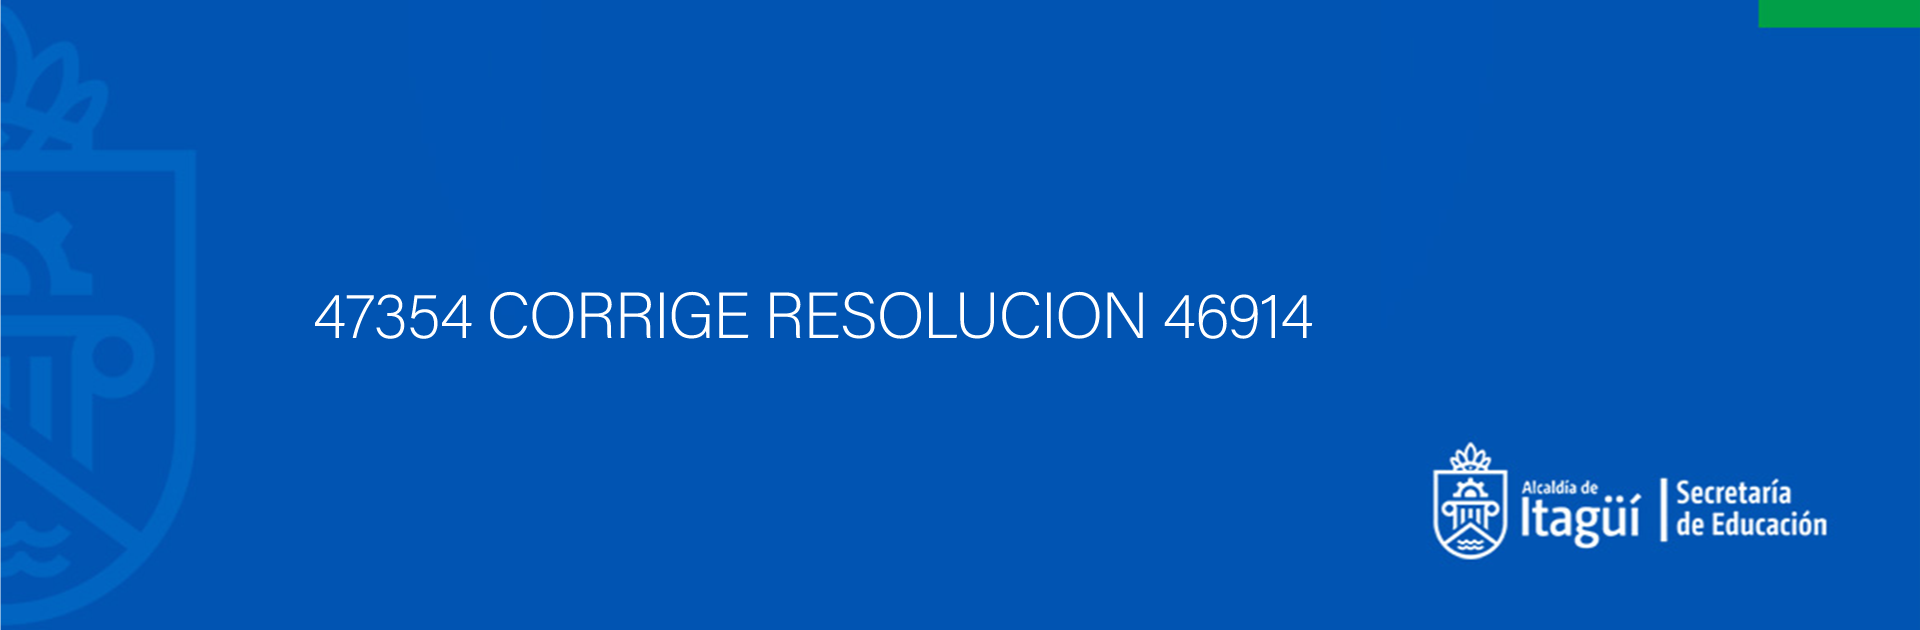 47354 CORRIGE RESOLUCION 46914